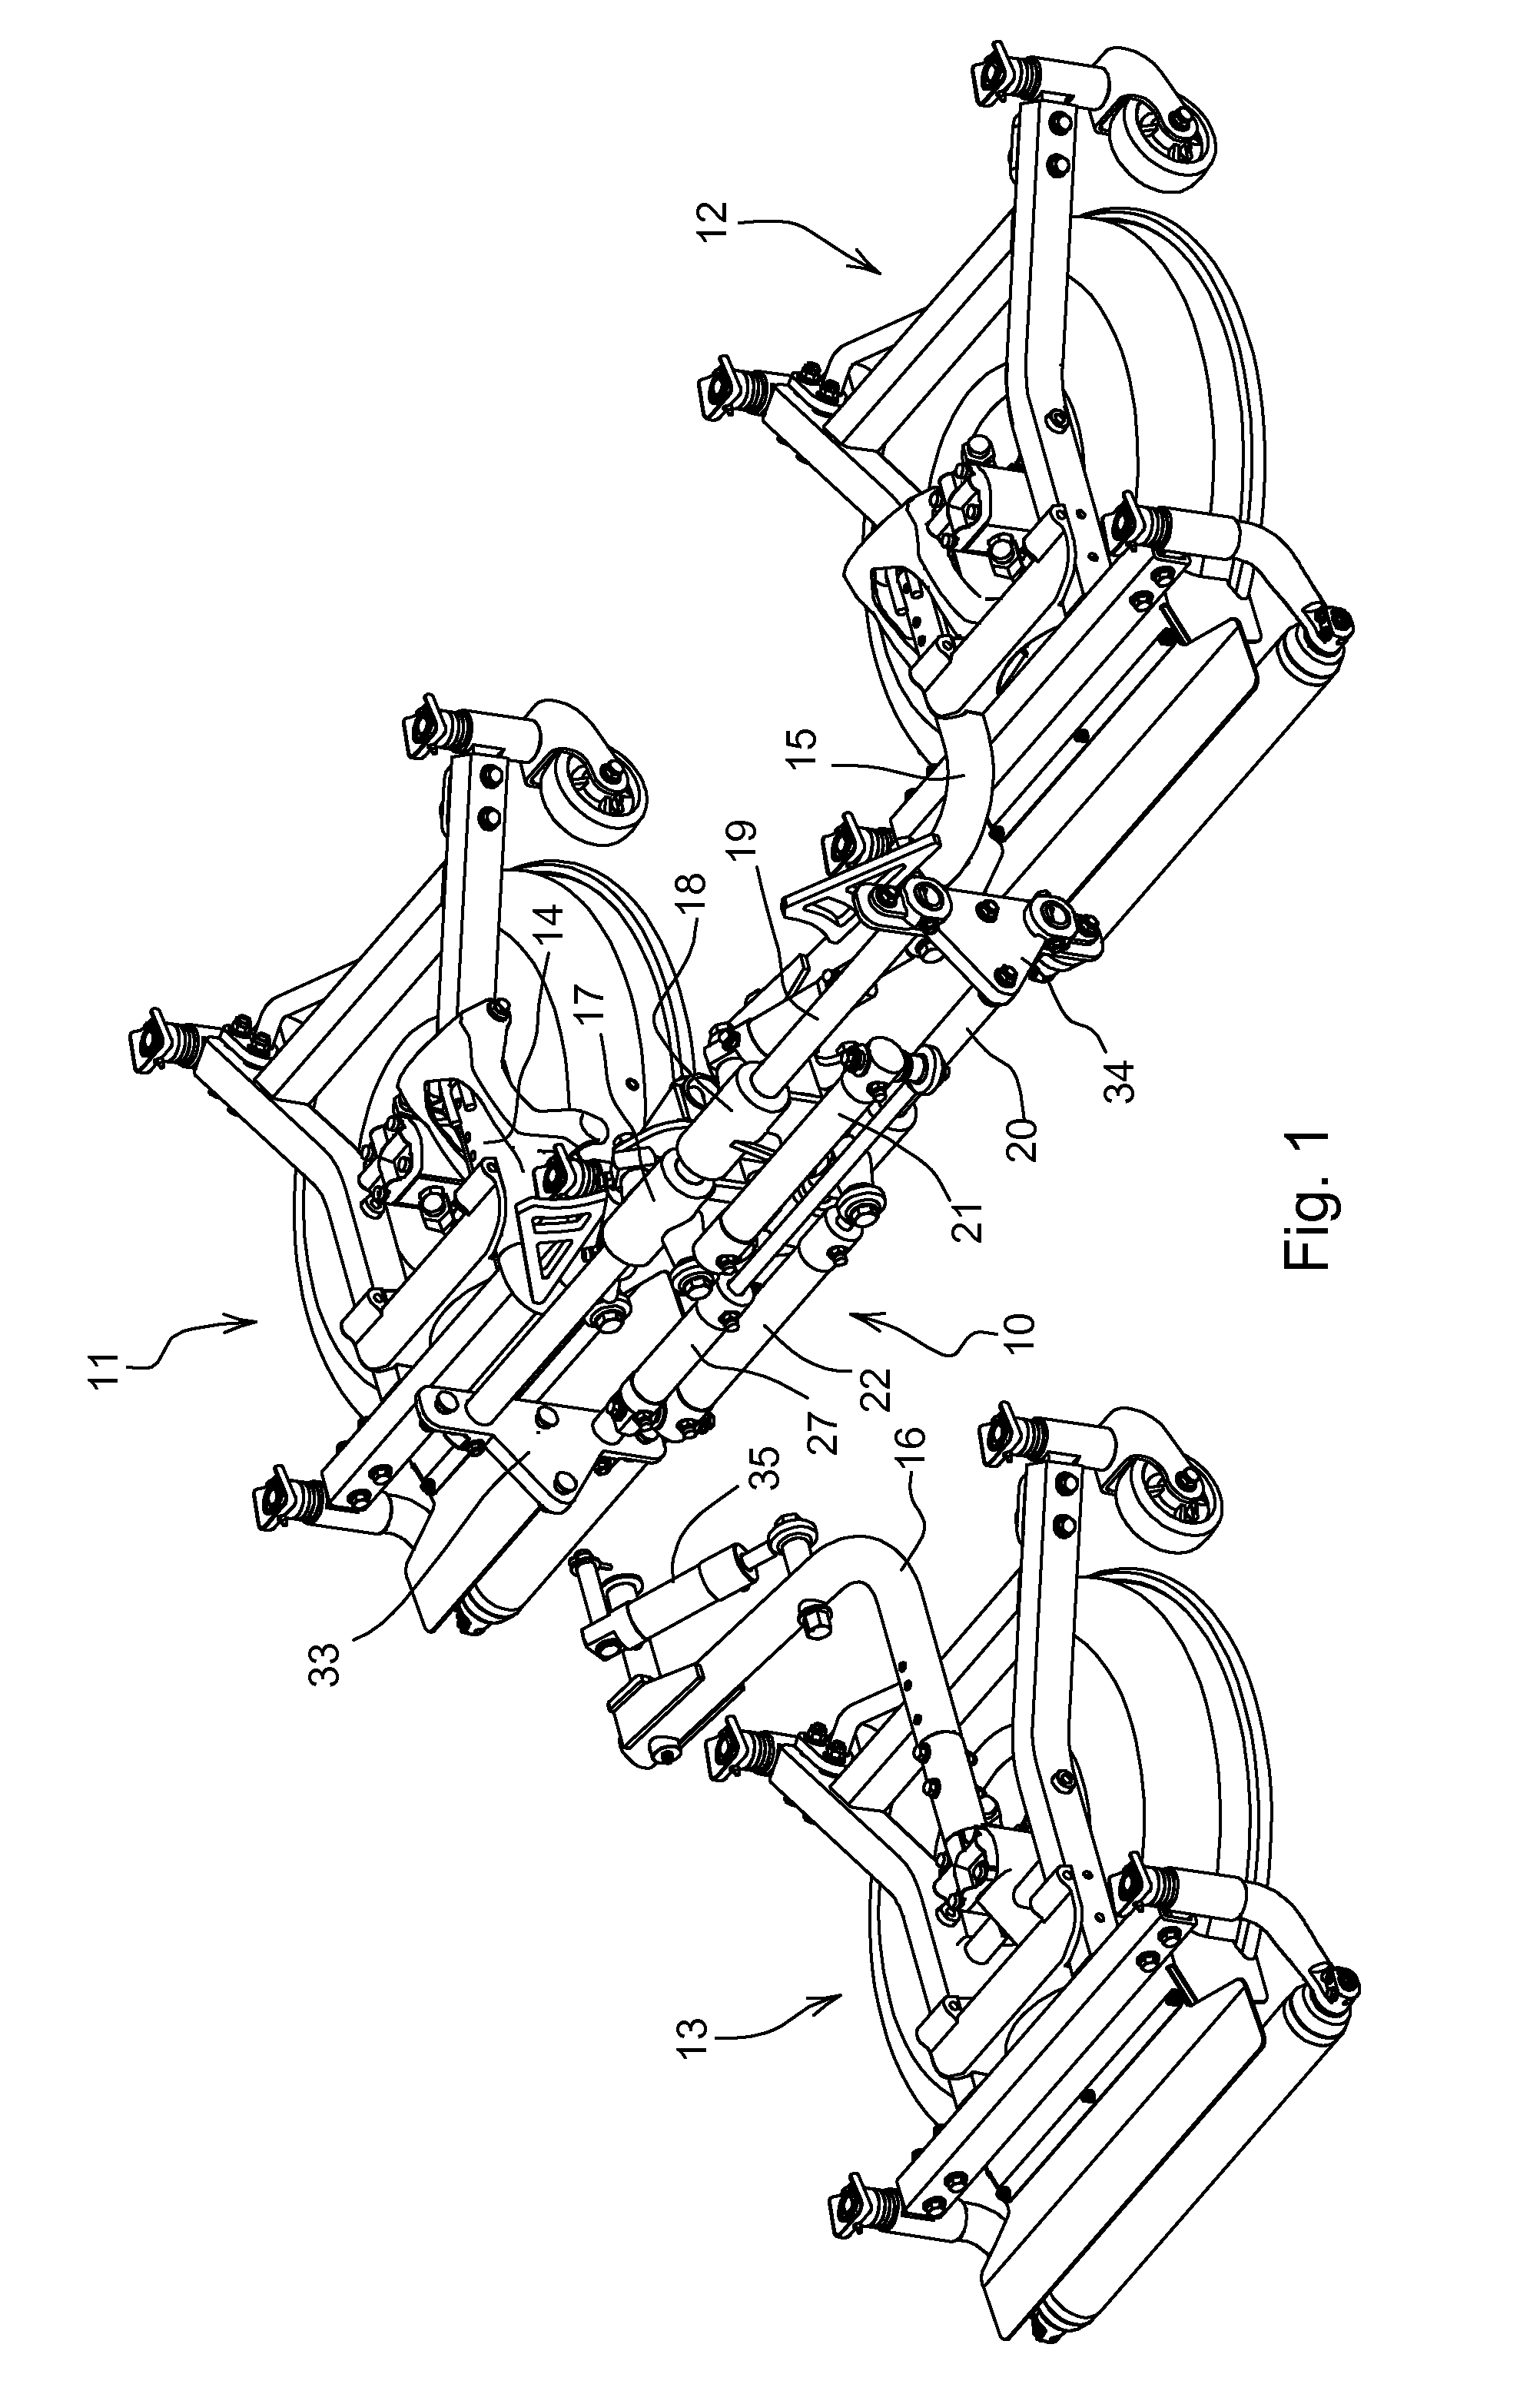 Shift mechanism for trim mower cutting units